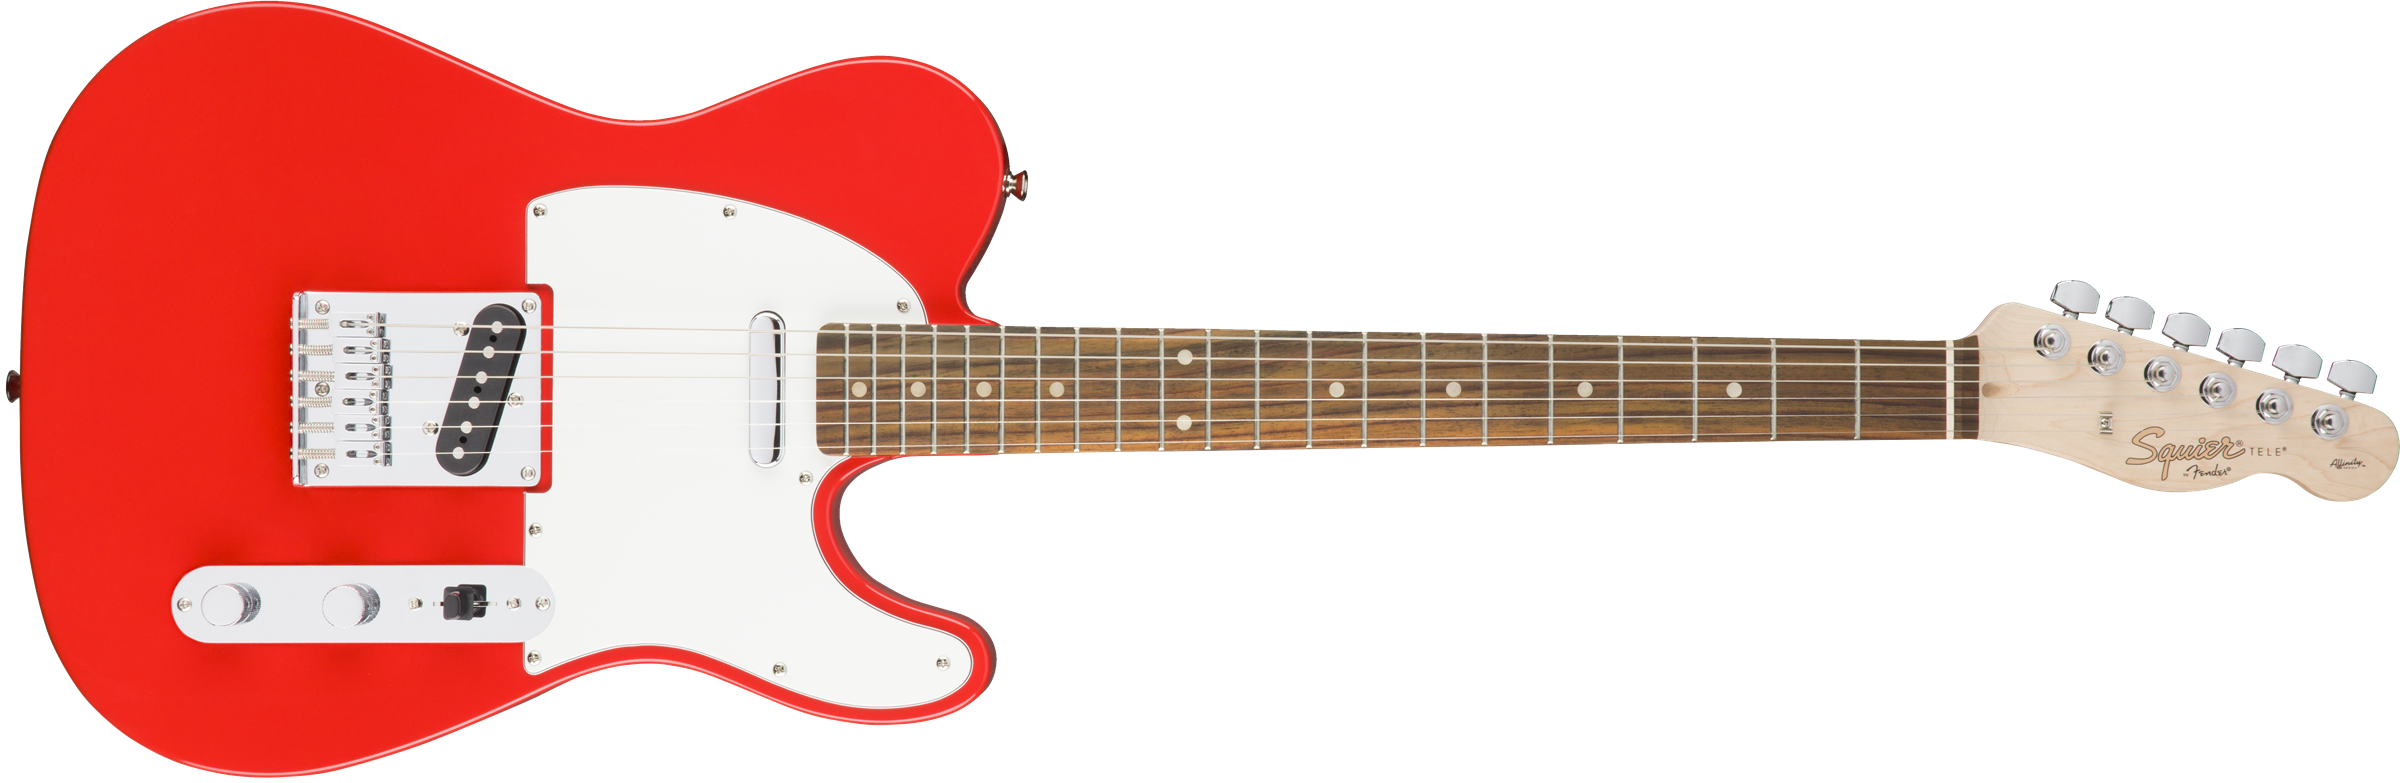 Squier Tele Affinity Series 2019 Lau - Race Red - Guitarra eléctrica con forma de tel - Variation 1